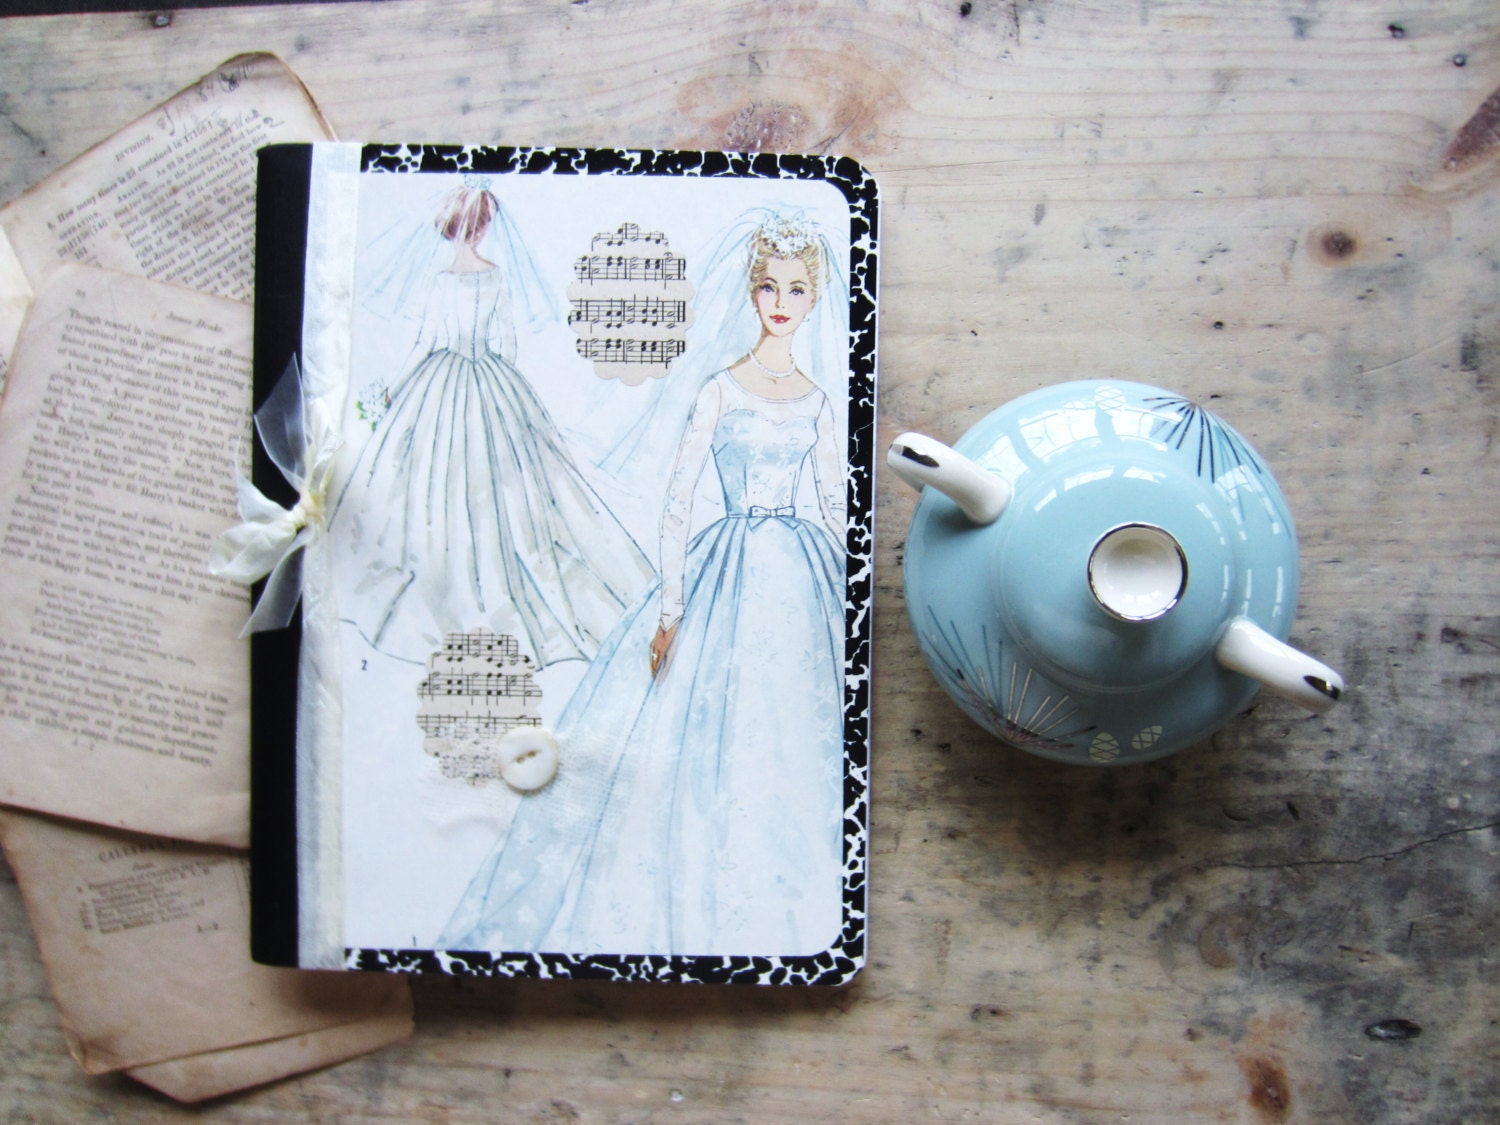 Vintage Wedding Guest Book or Journal - VintageScraps